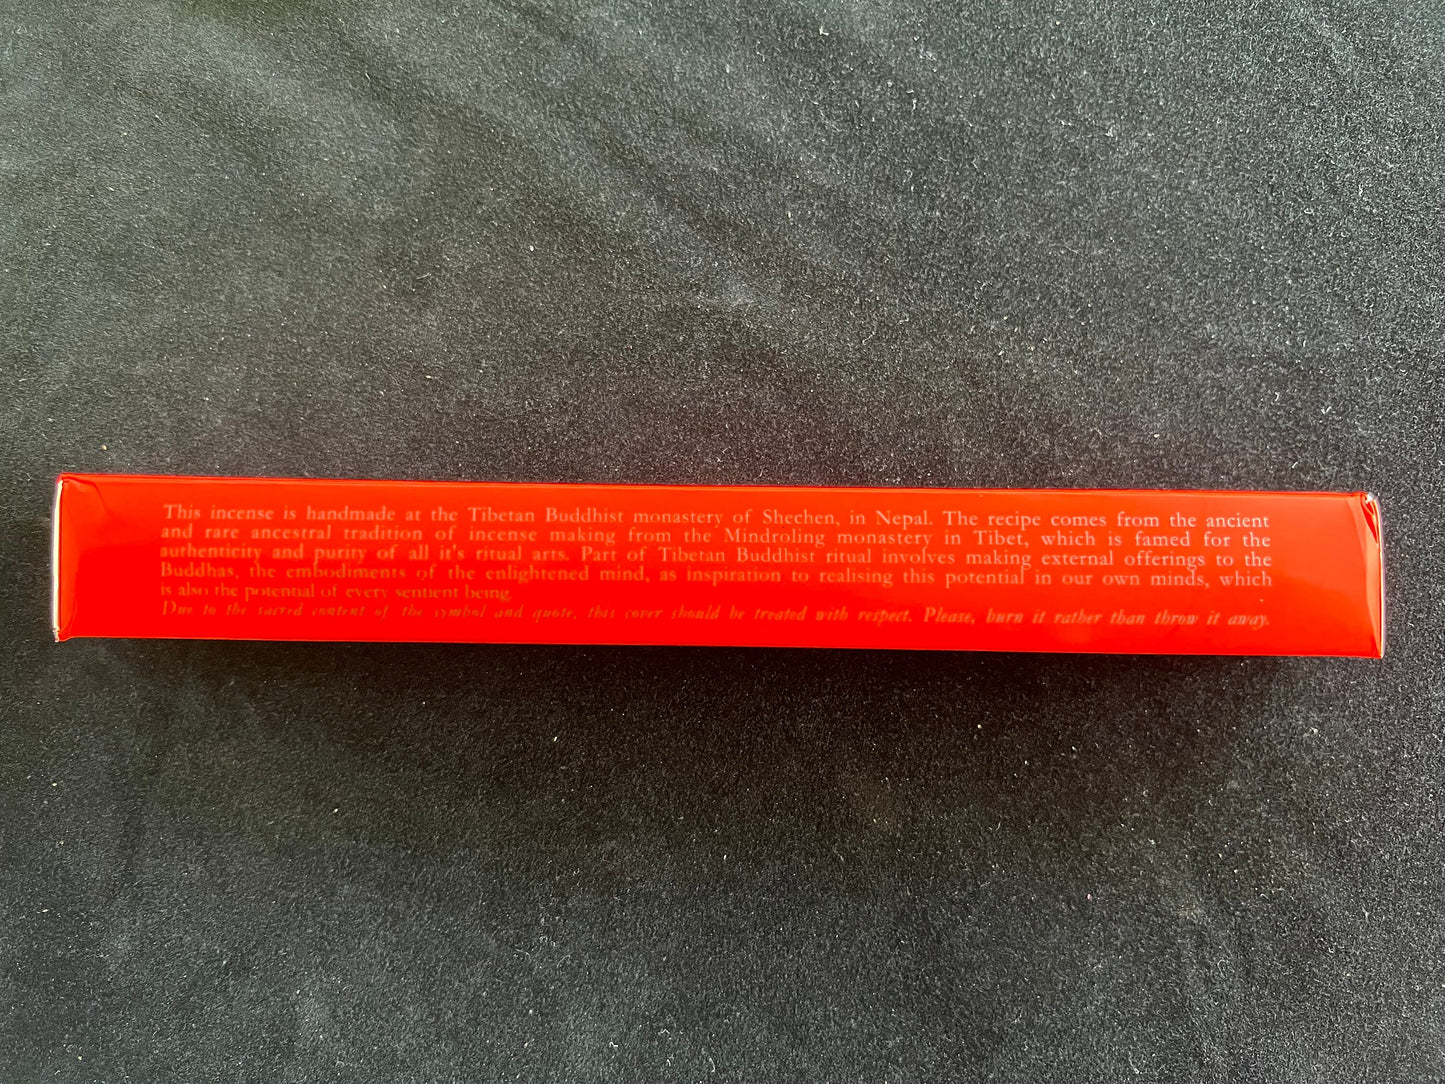 Shechen Red Box Incense | Tibetan Incense | 30 sticks | 10 inches